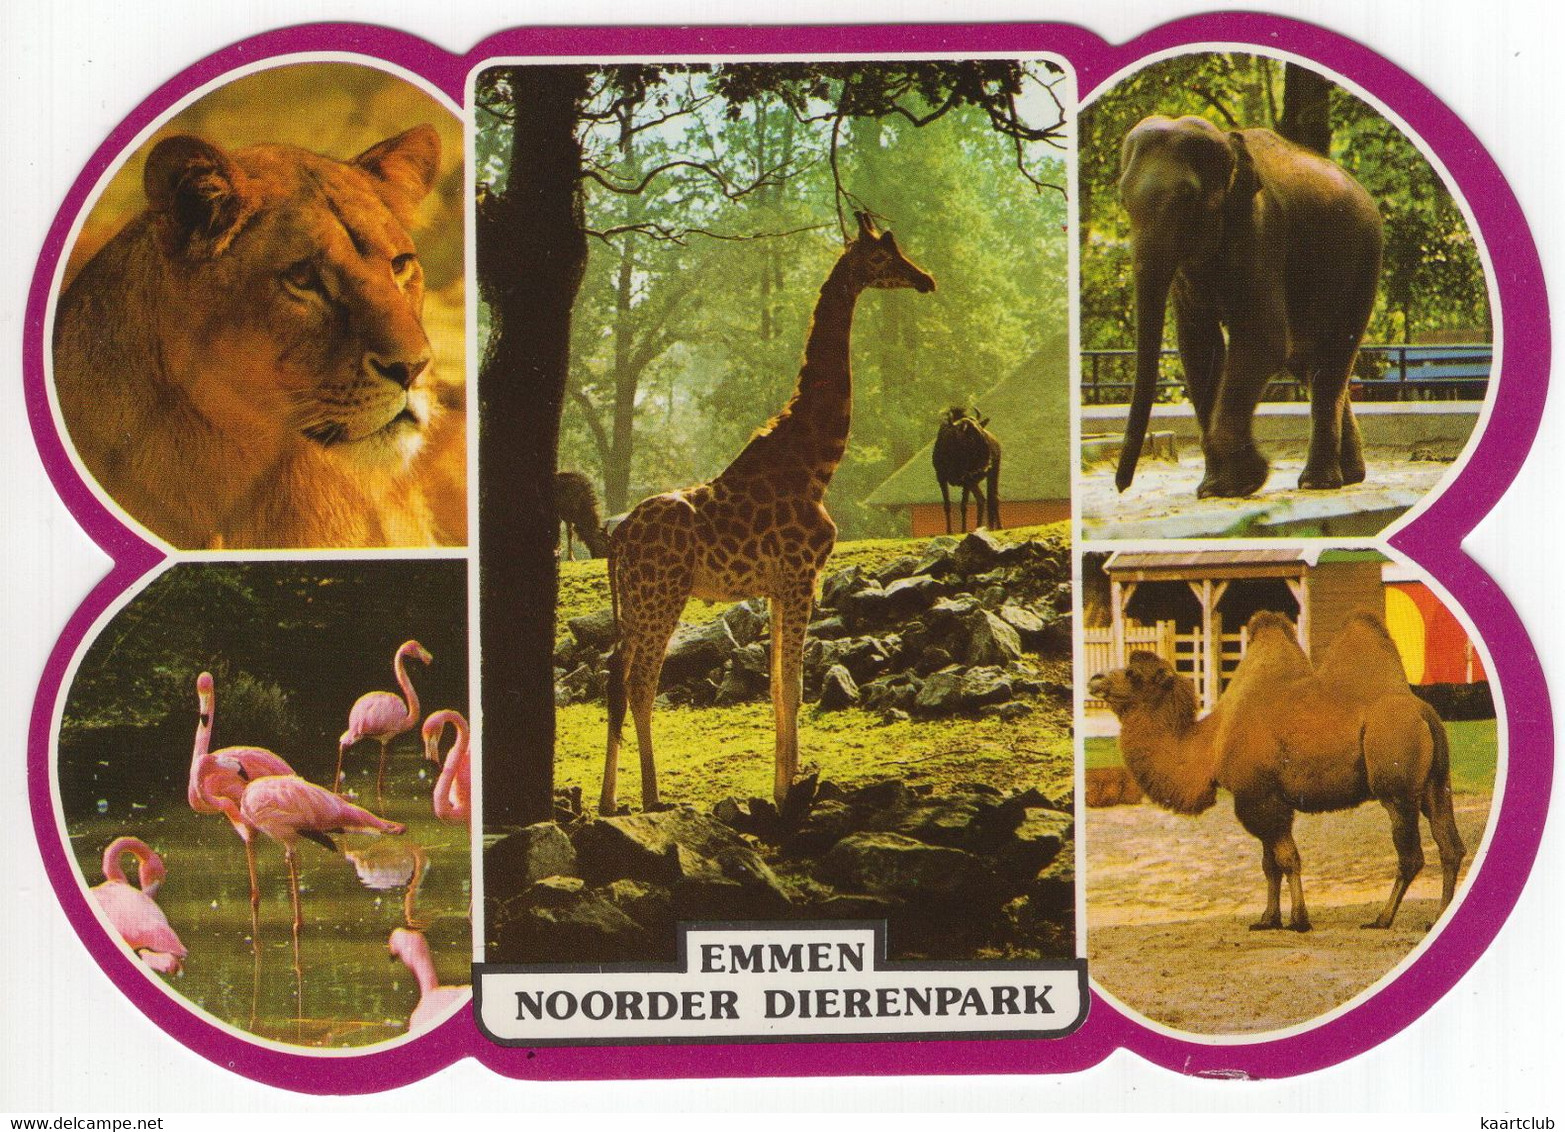 Emmen - Noorder Dierenpark - (Drenthe / Nederland) - Nr. LS 4558 - Zoo: Leeuwin,Giraffe,Olifant,Dromedaris,Flamingo's - Emmen